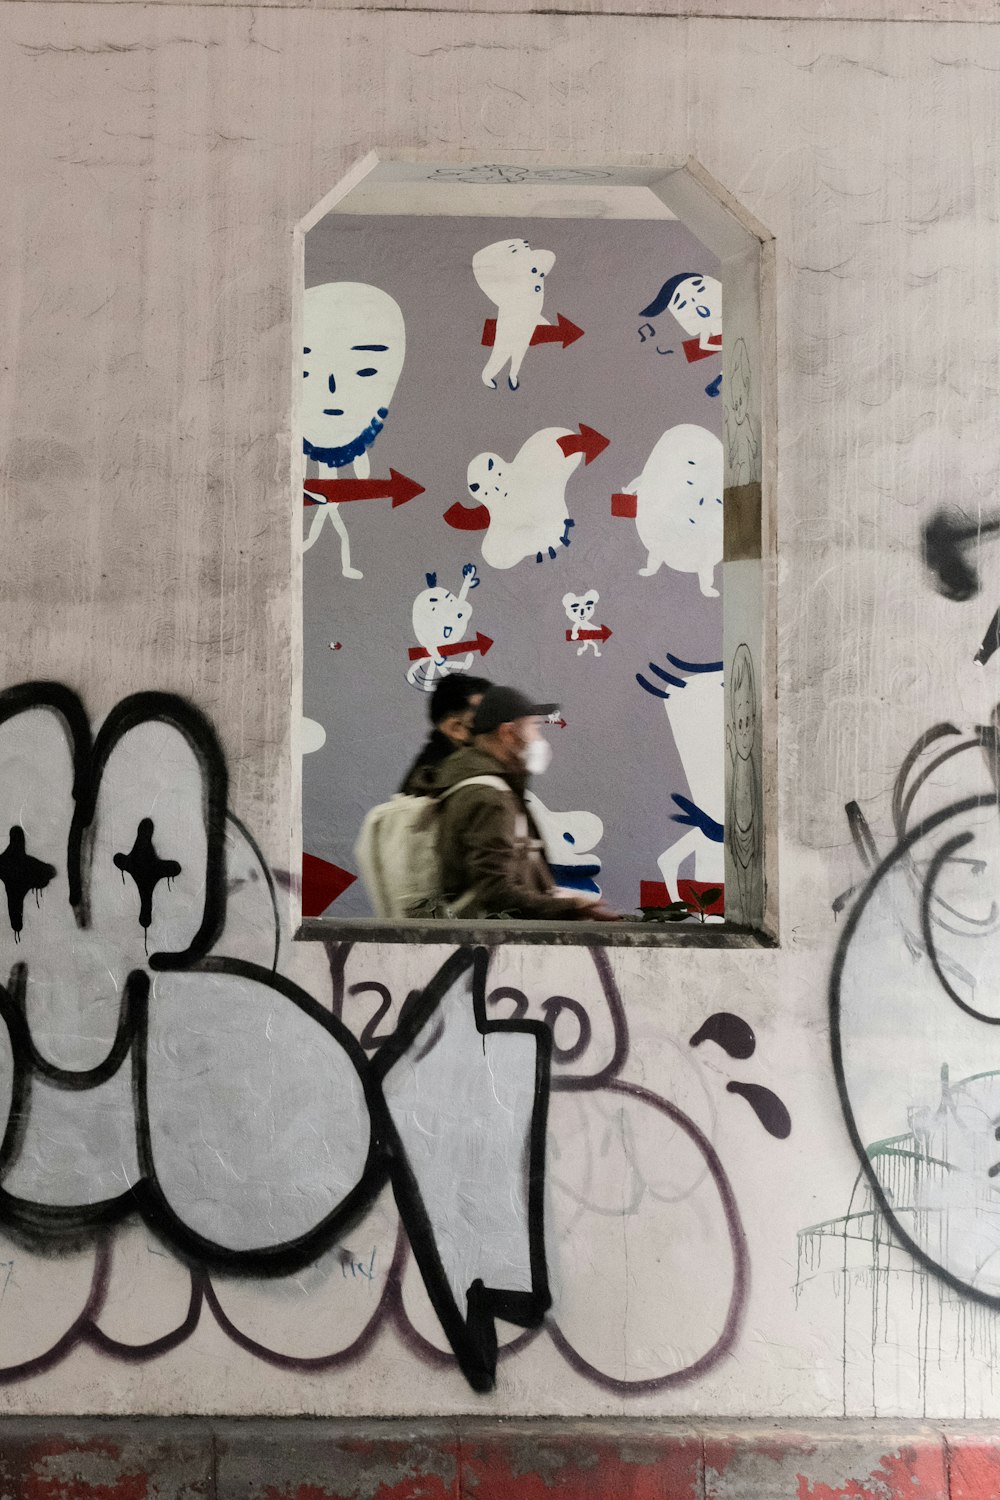 a man walking past a wall with graffiti on it